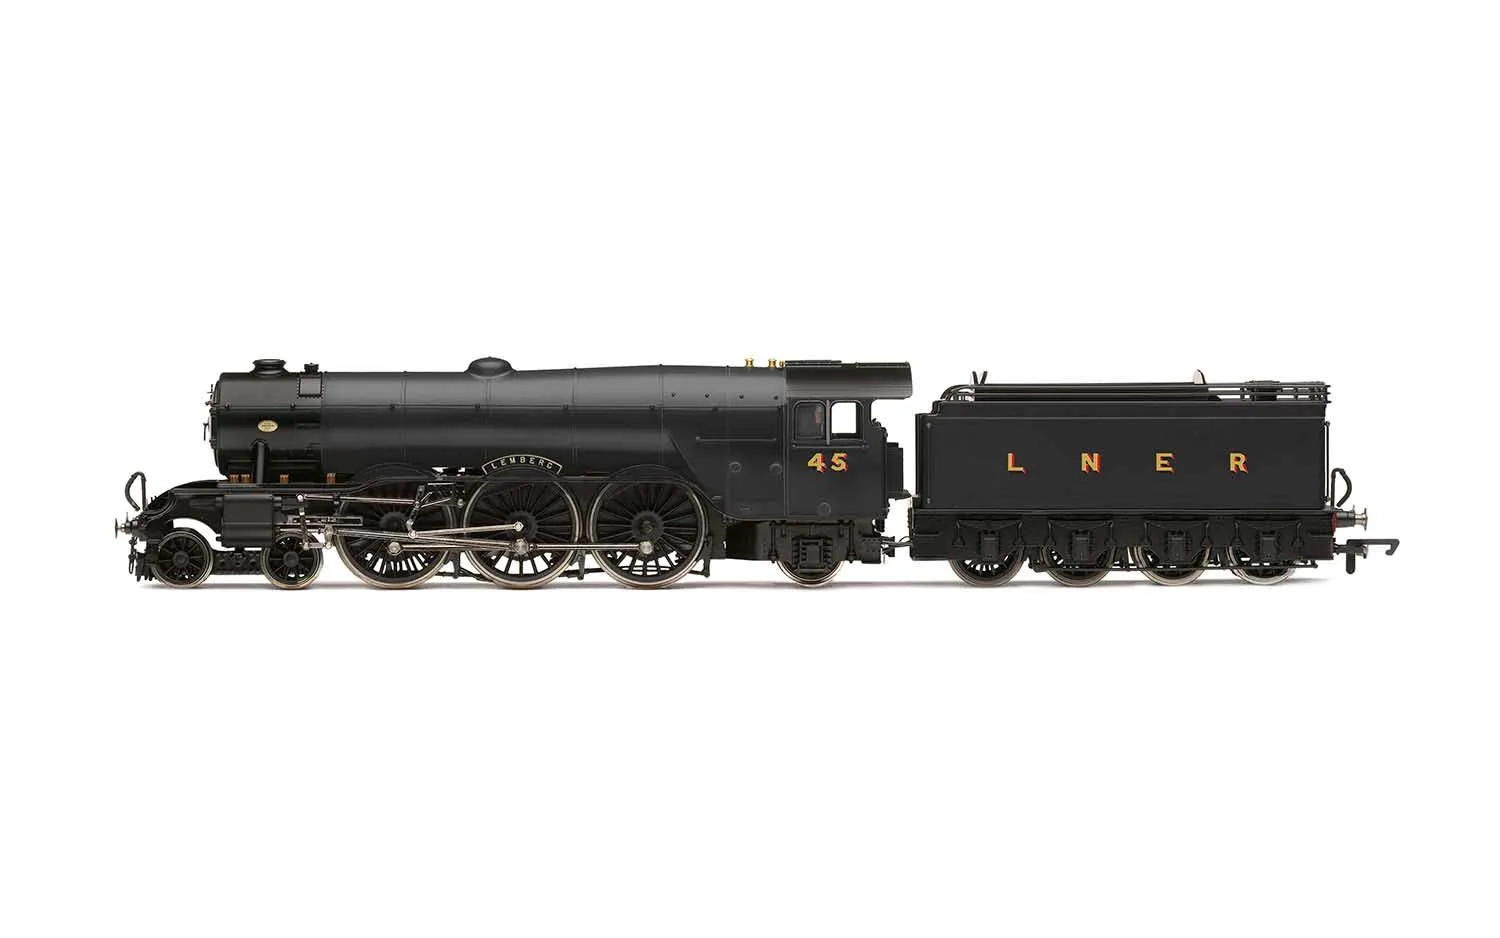 LNER, A3 Class, No. 45 'Lemberg' (diecast footplate and flickering firebox) - Era 3